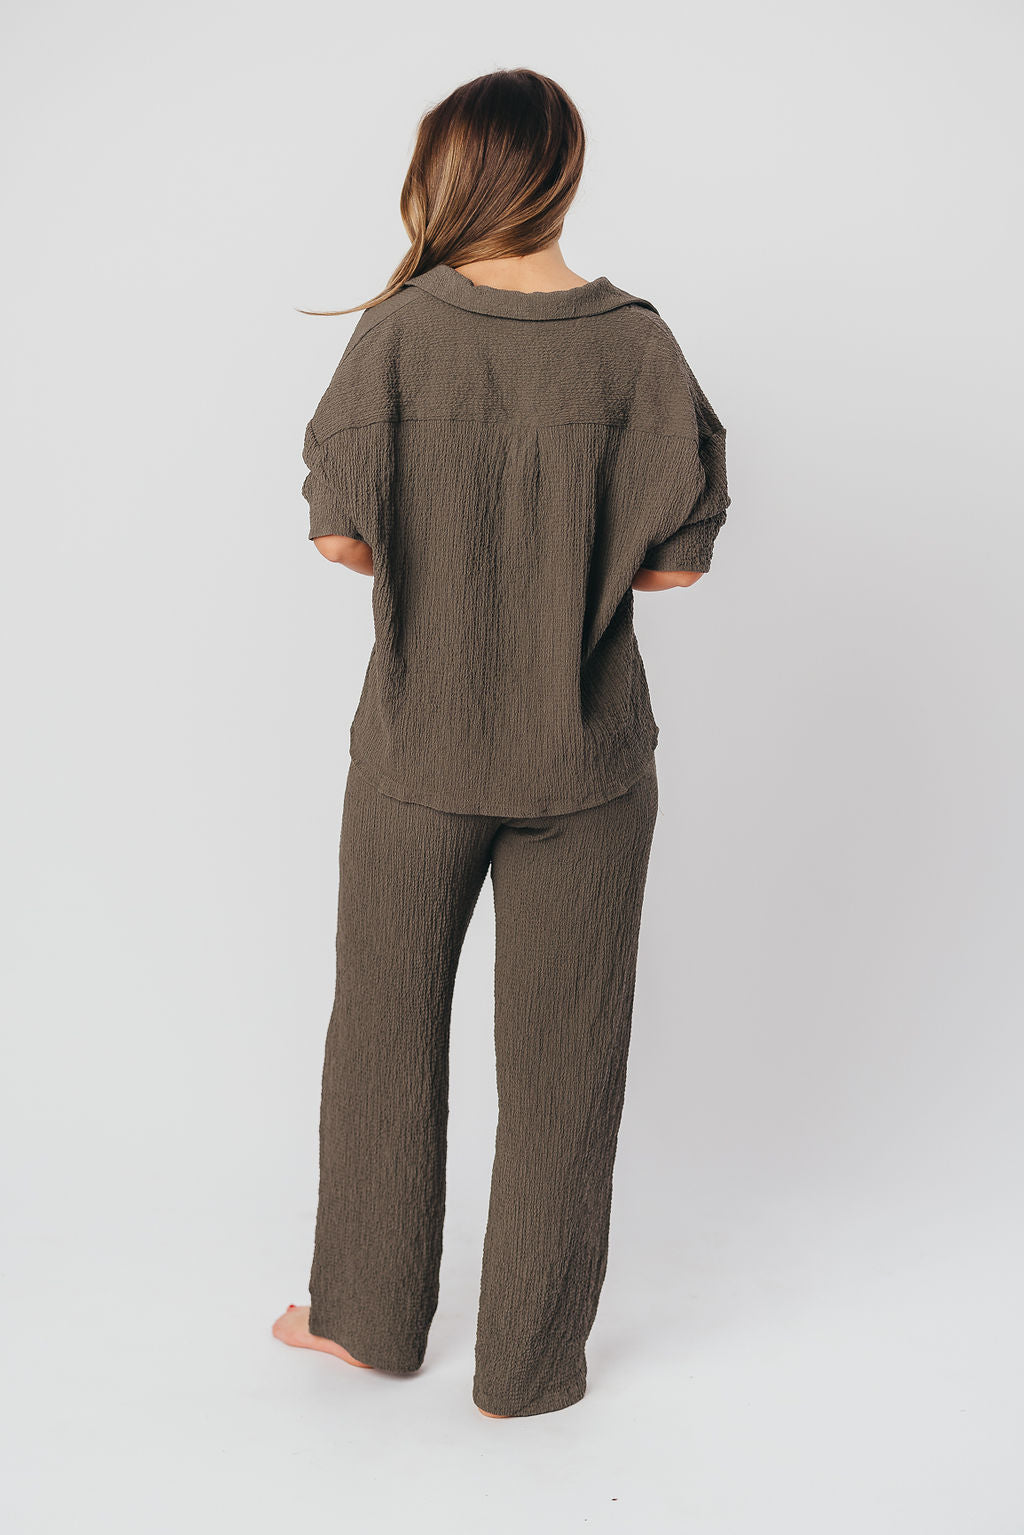 Adaline Textured Wide Leg Pants and Shirt Set in Dark Grey - Nursing Friendly